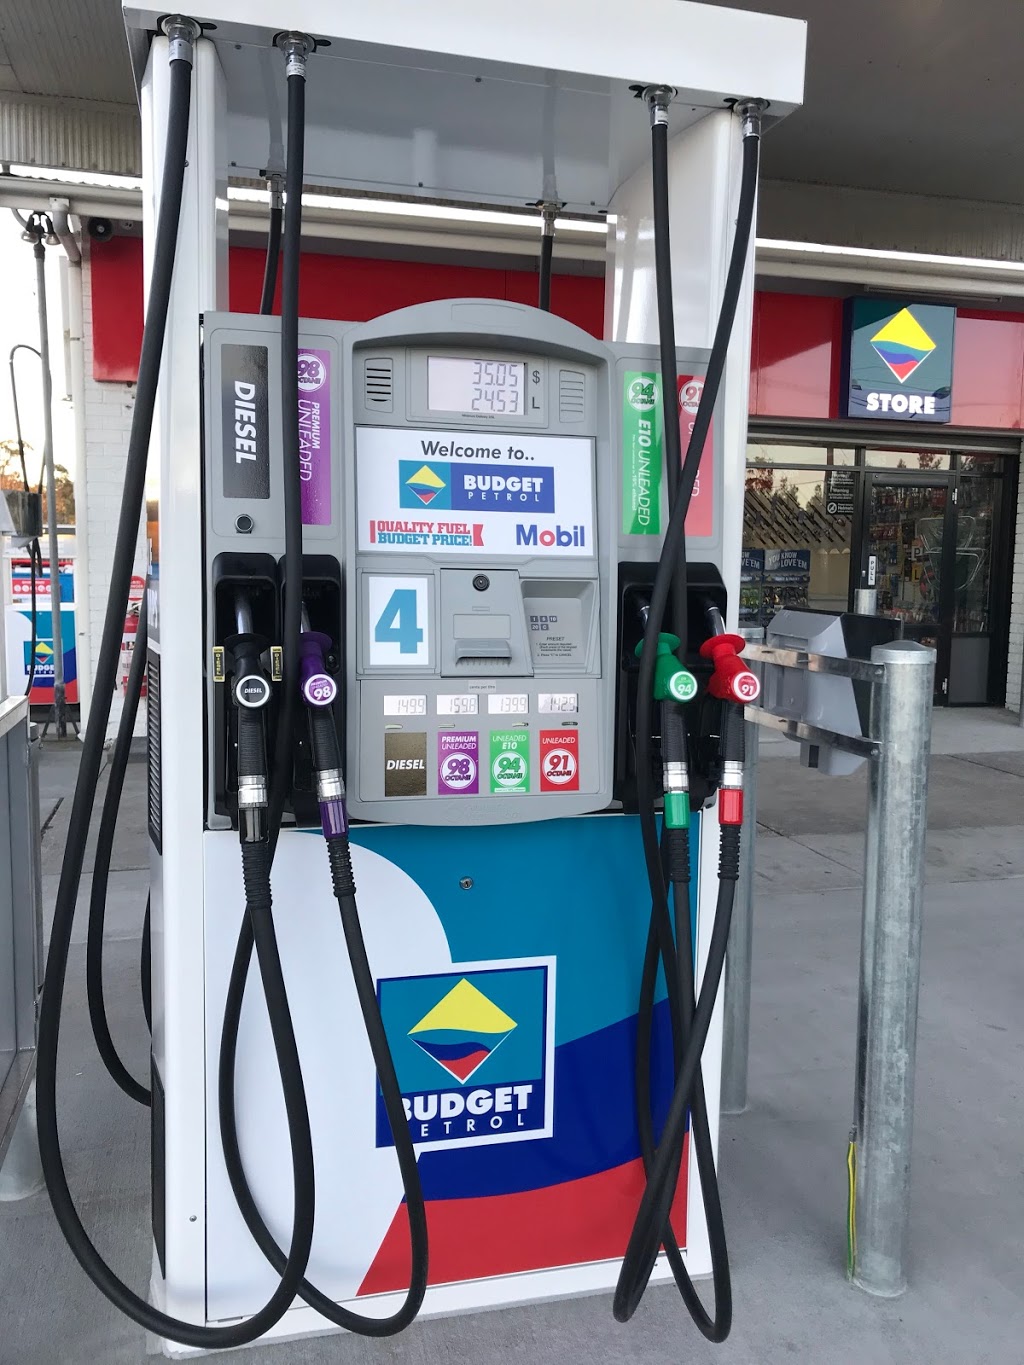 Budget Petrol Sanctuary Point | gas station | 147 Larmer Ave, Sanctuary Point NSW 2540, Australia | 0244430113 OR +61 2 4443 0113